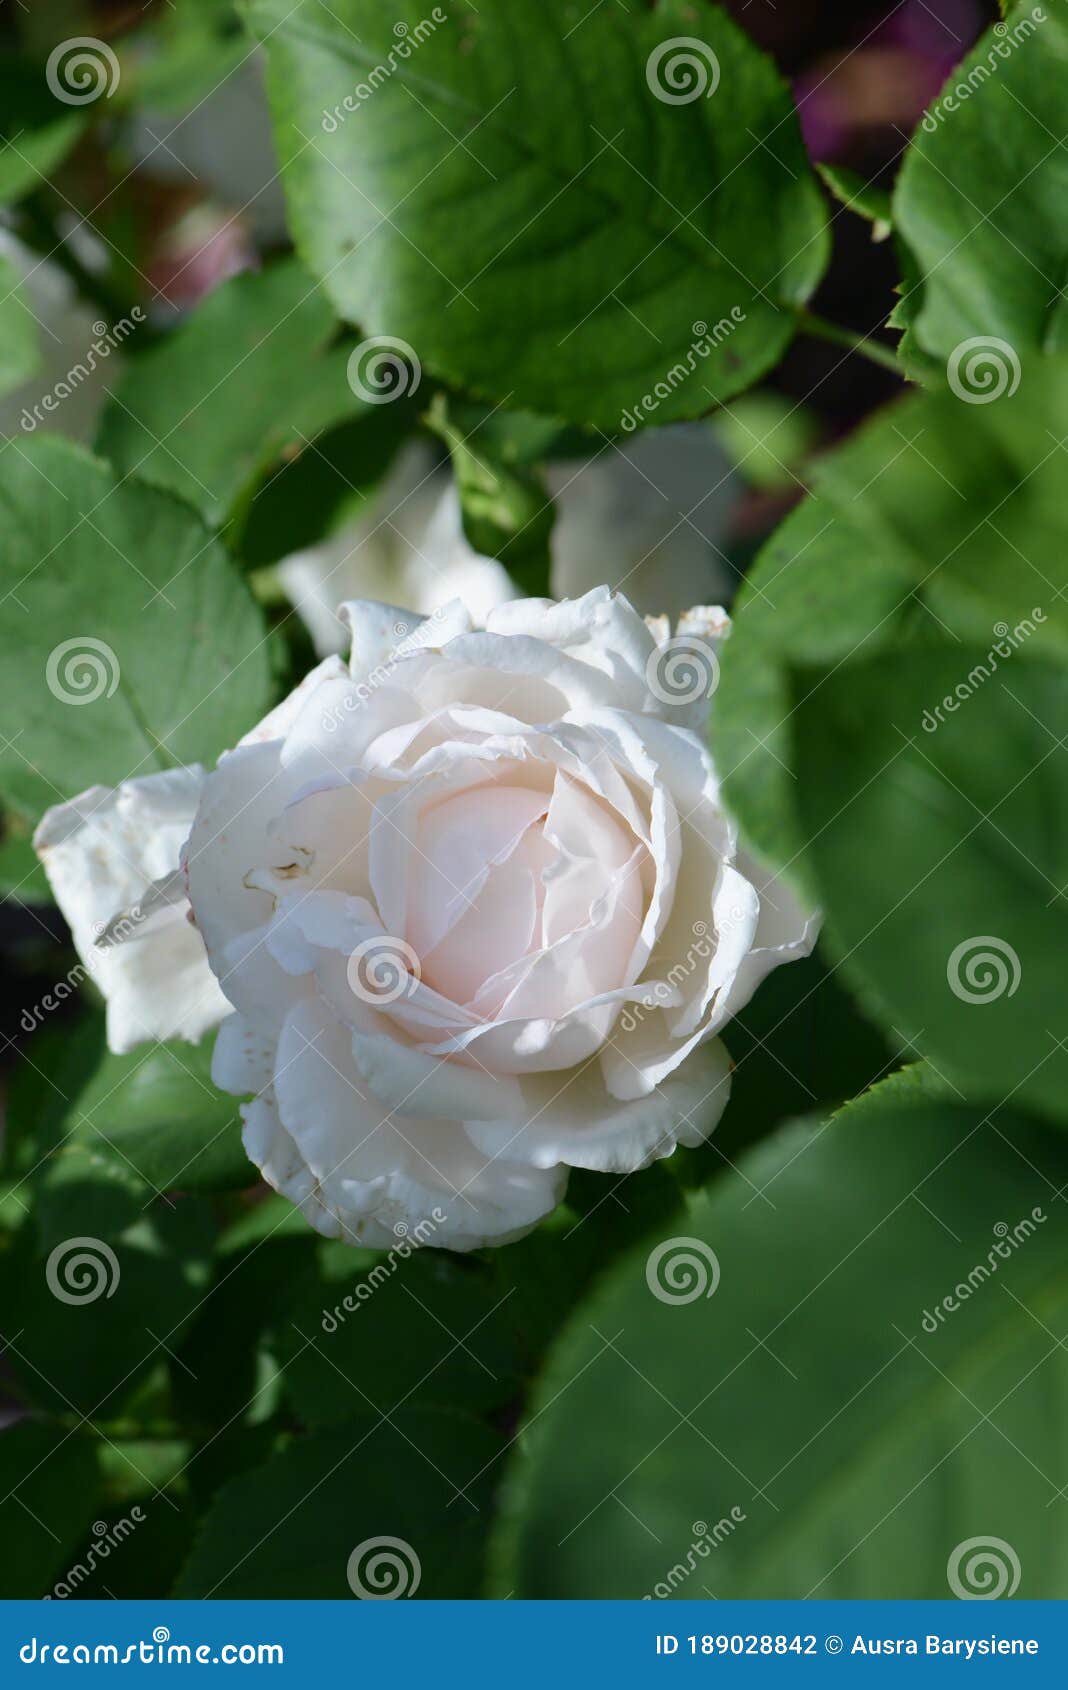 white rose variety frau karl druschki flowering in a garden